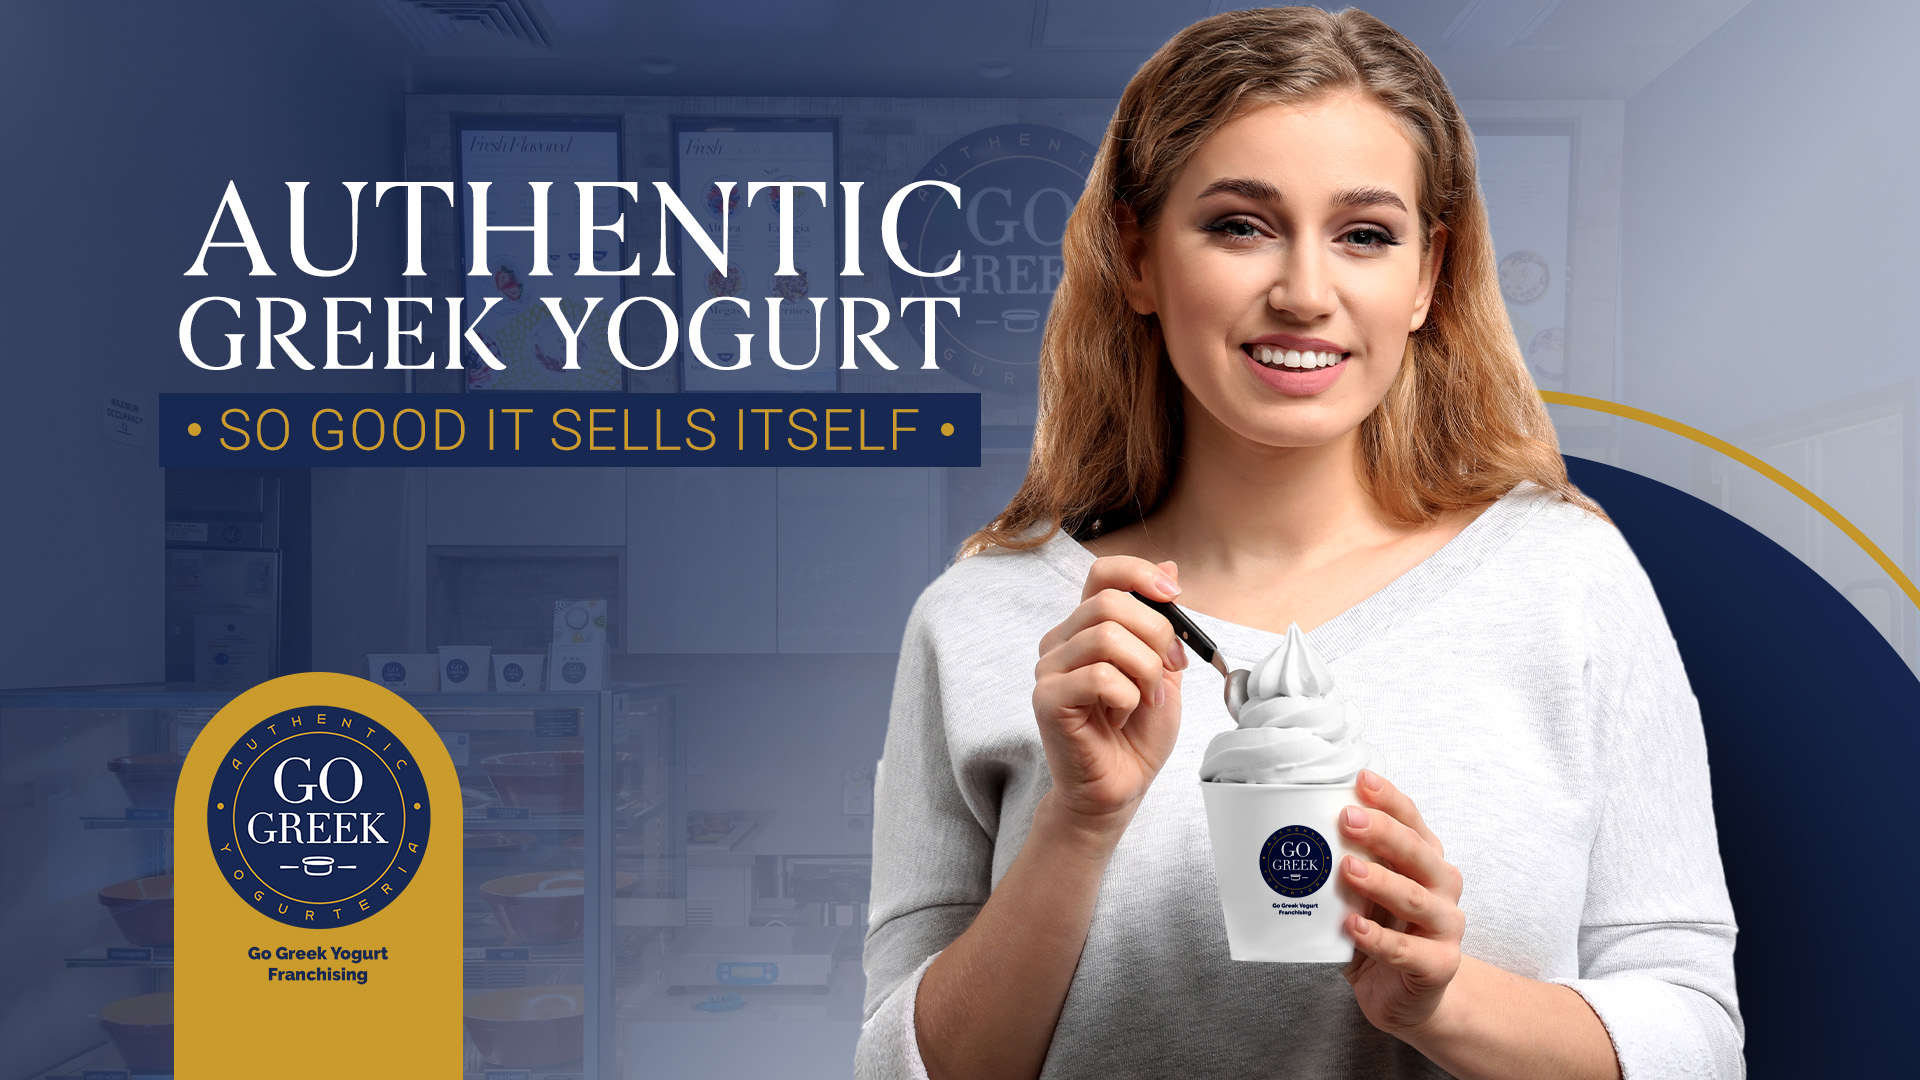 The Go Greek Yogurt Franchise